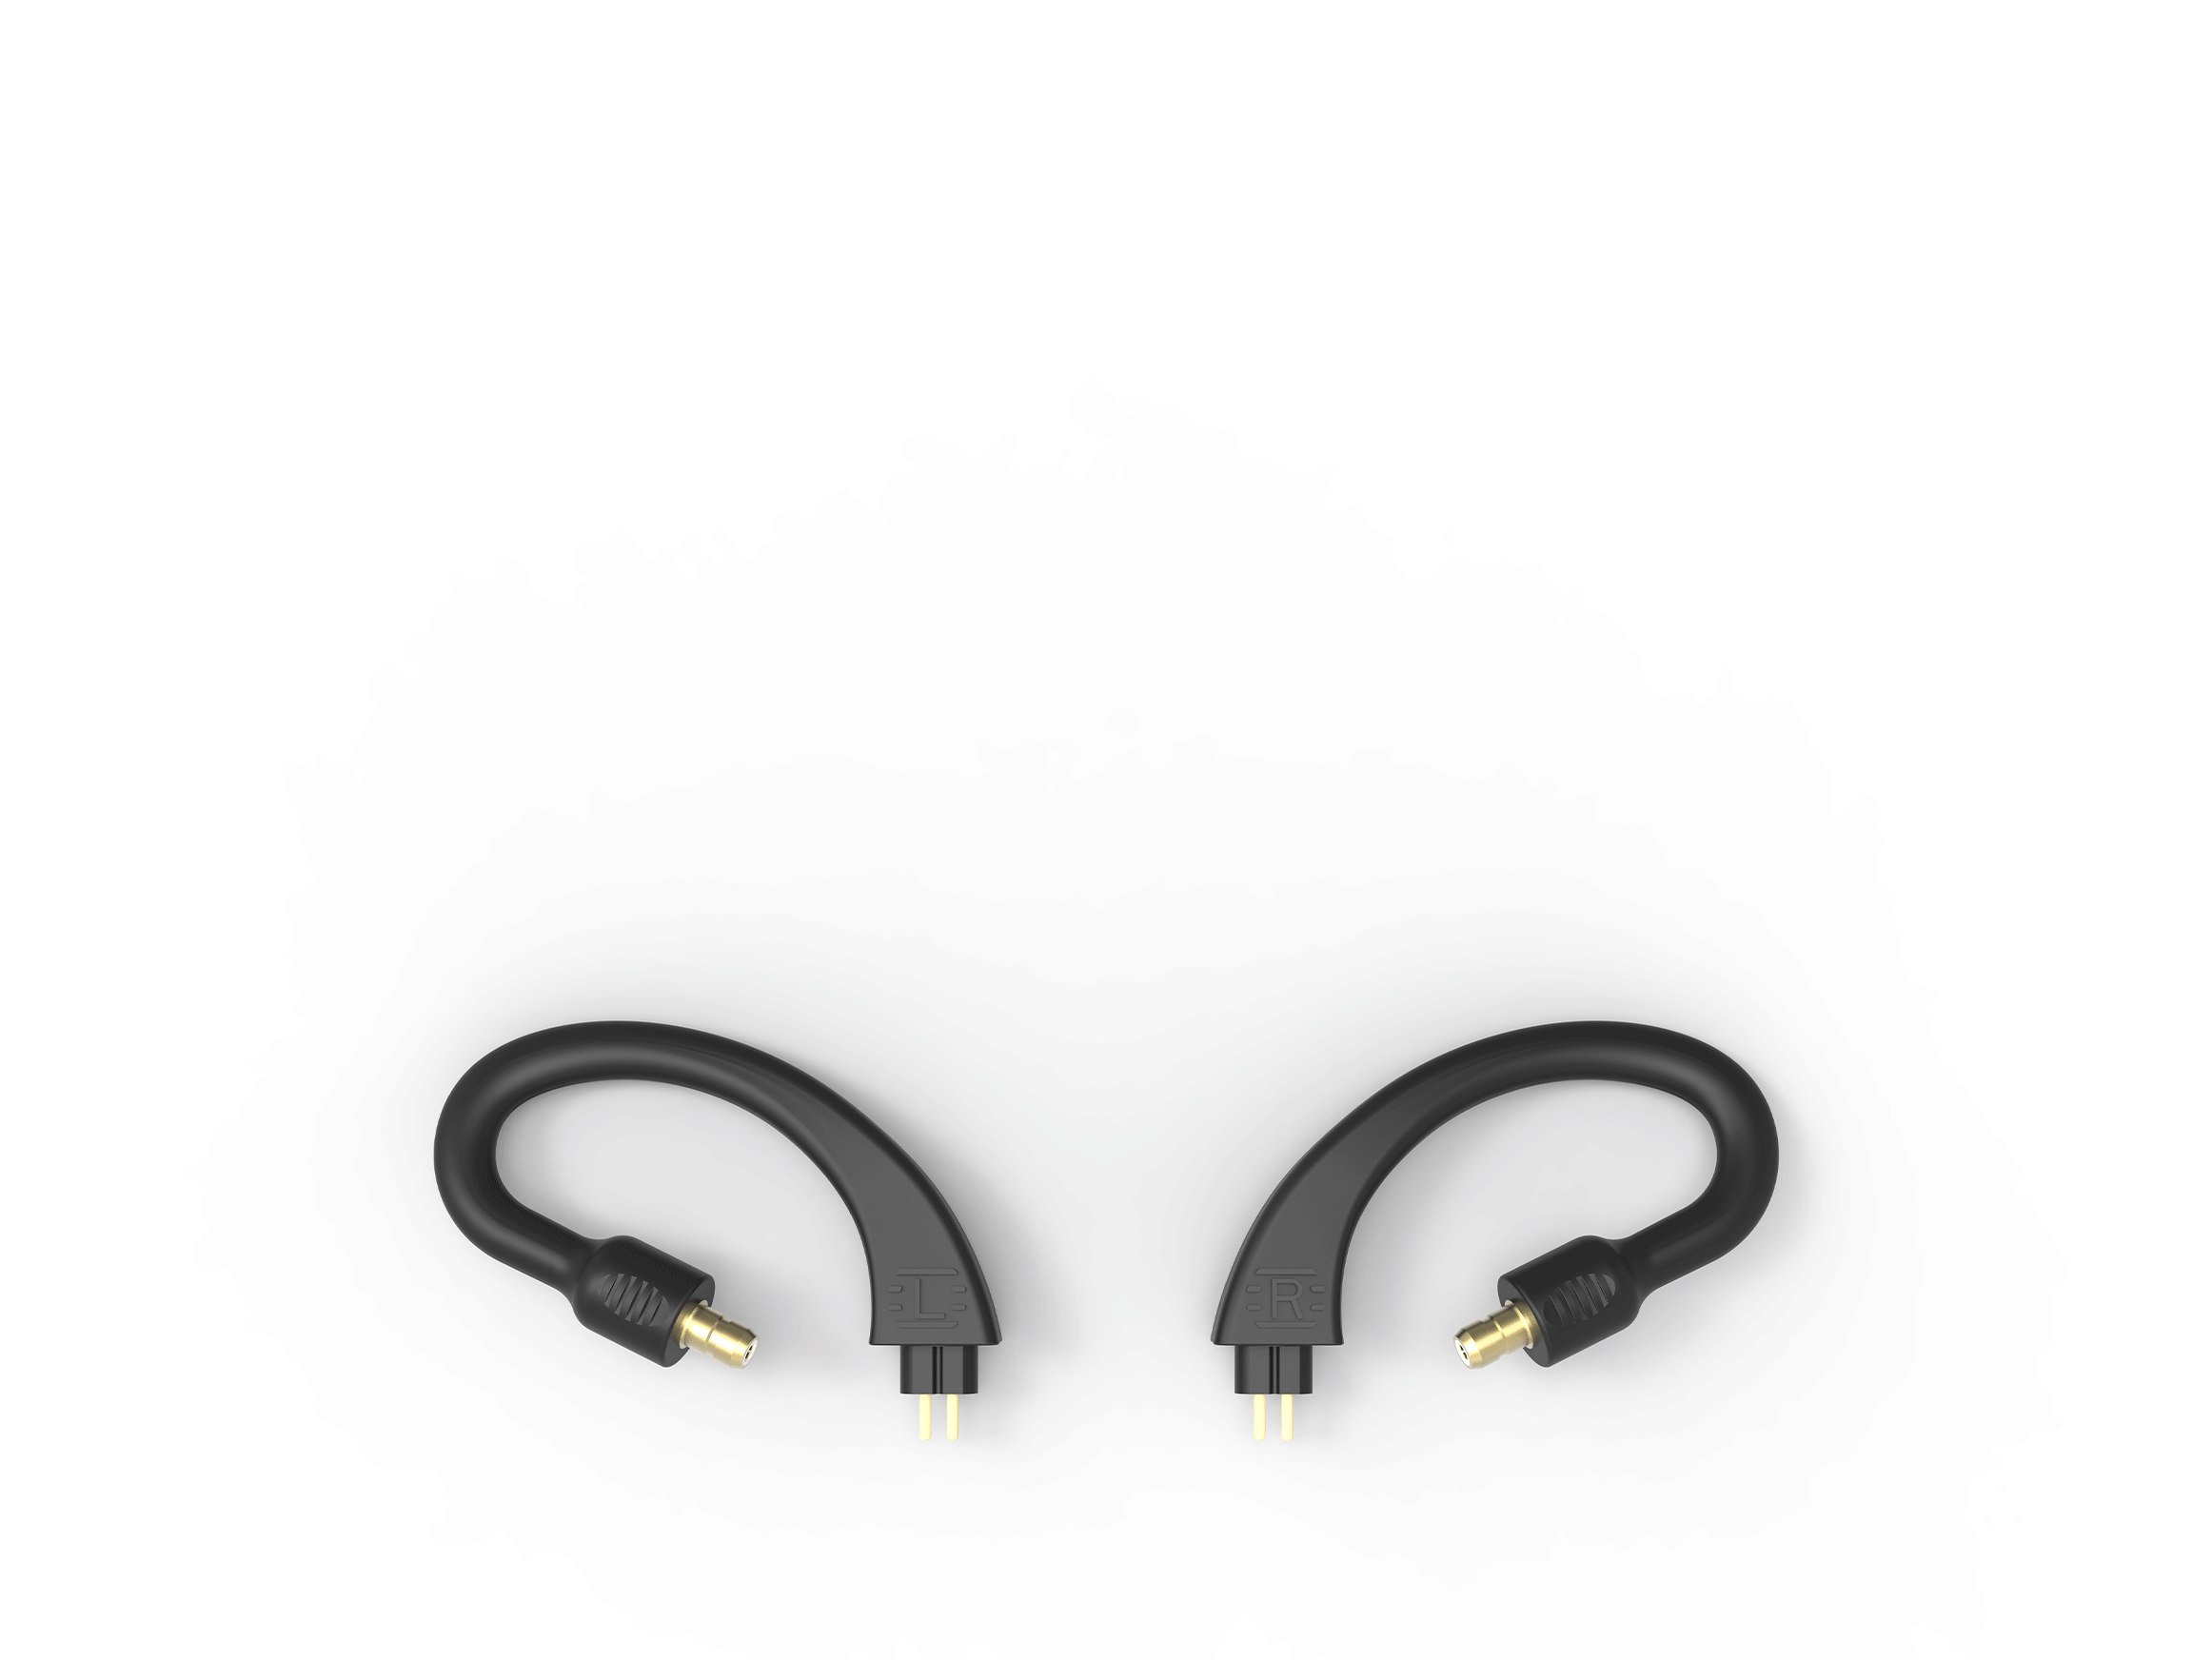 GO pod Pentaconn Ear Loop Set